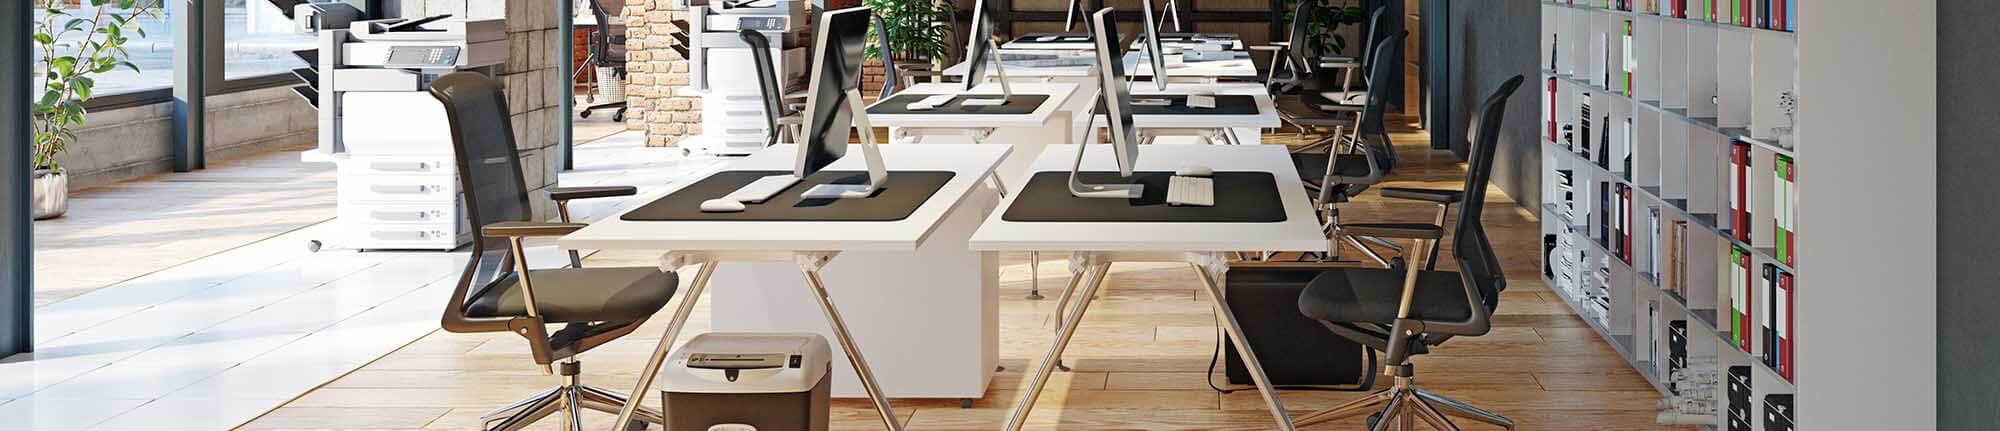 AmeriCare NY Revamp Executive Office Furniture set